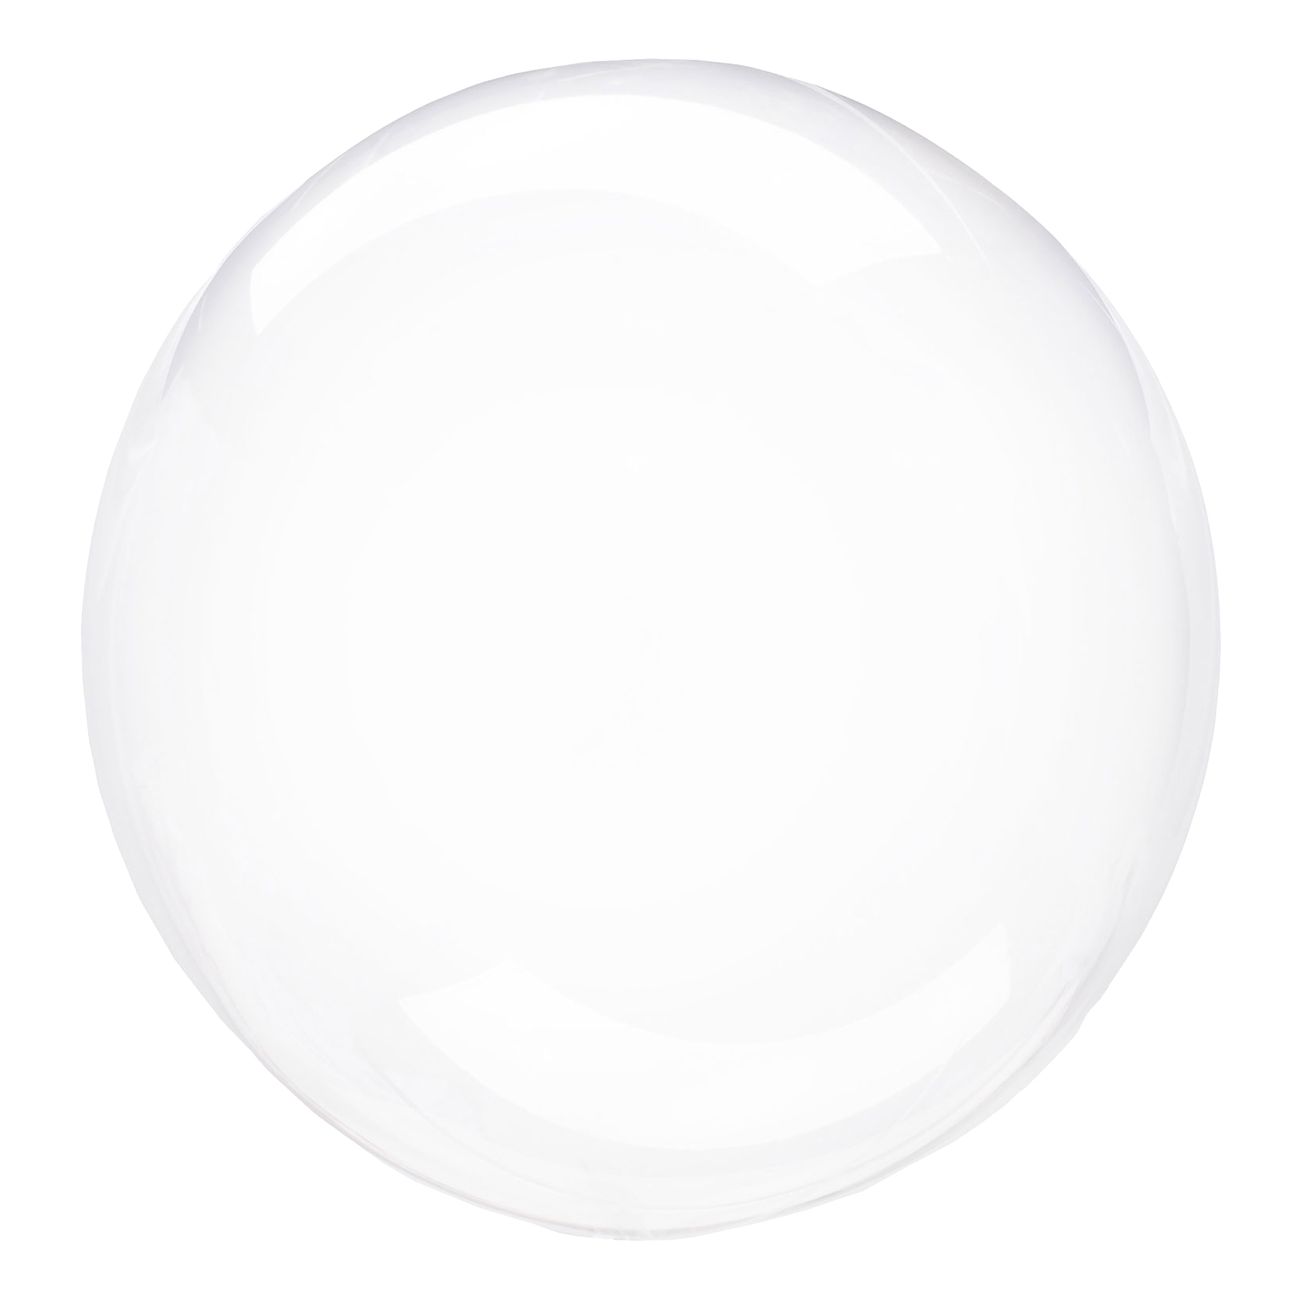 folieballong-crystal-clear-rund-transparent-95662-1